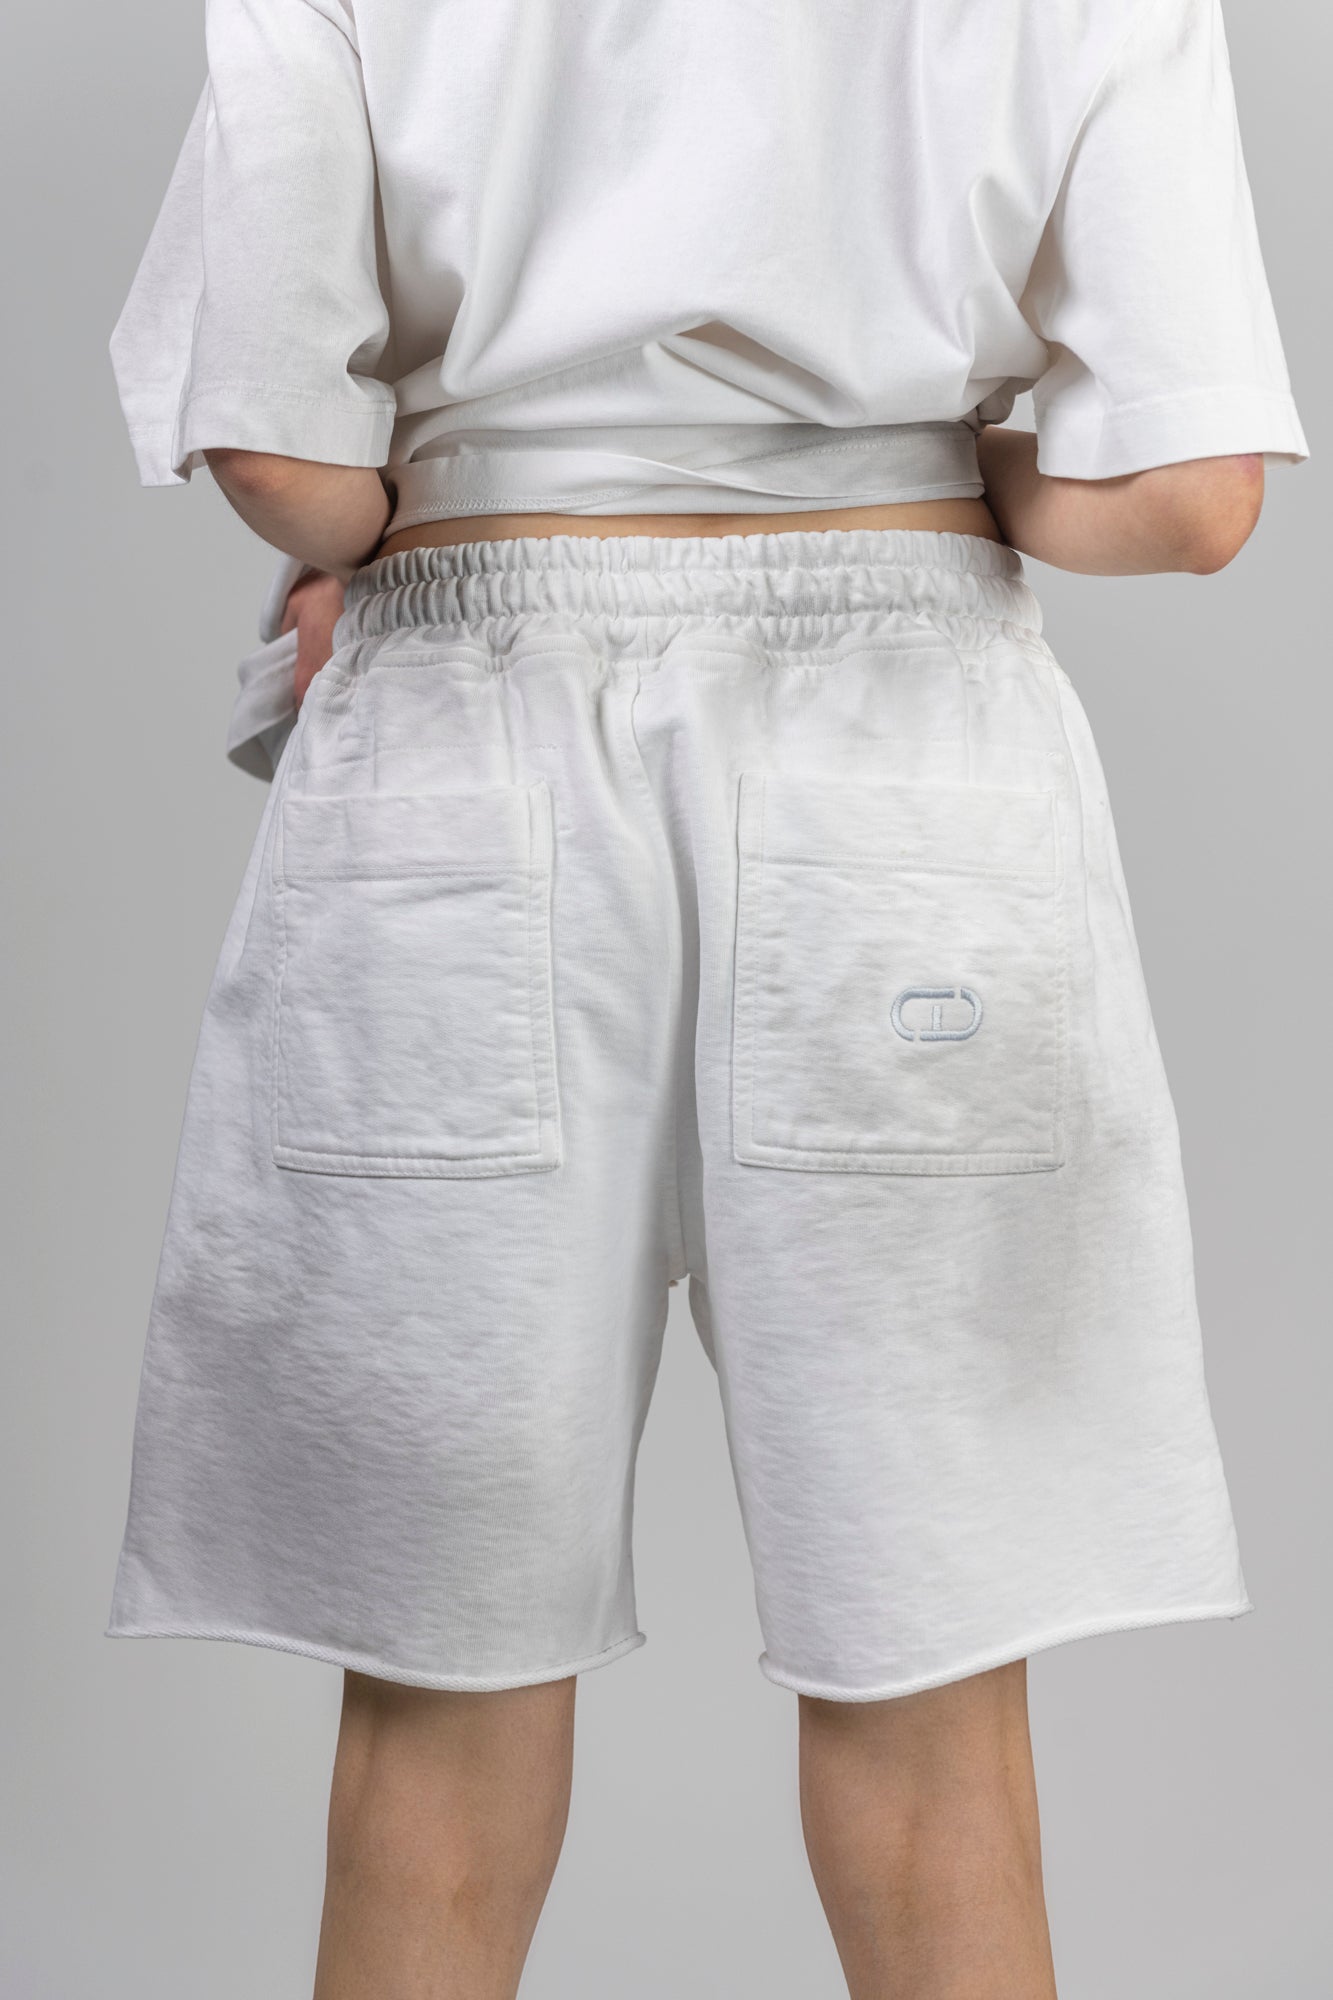 lactif-white-shorts-female-back-detail